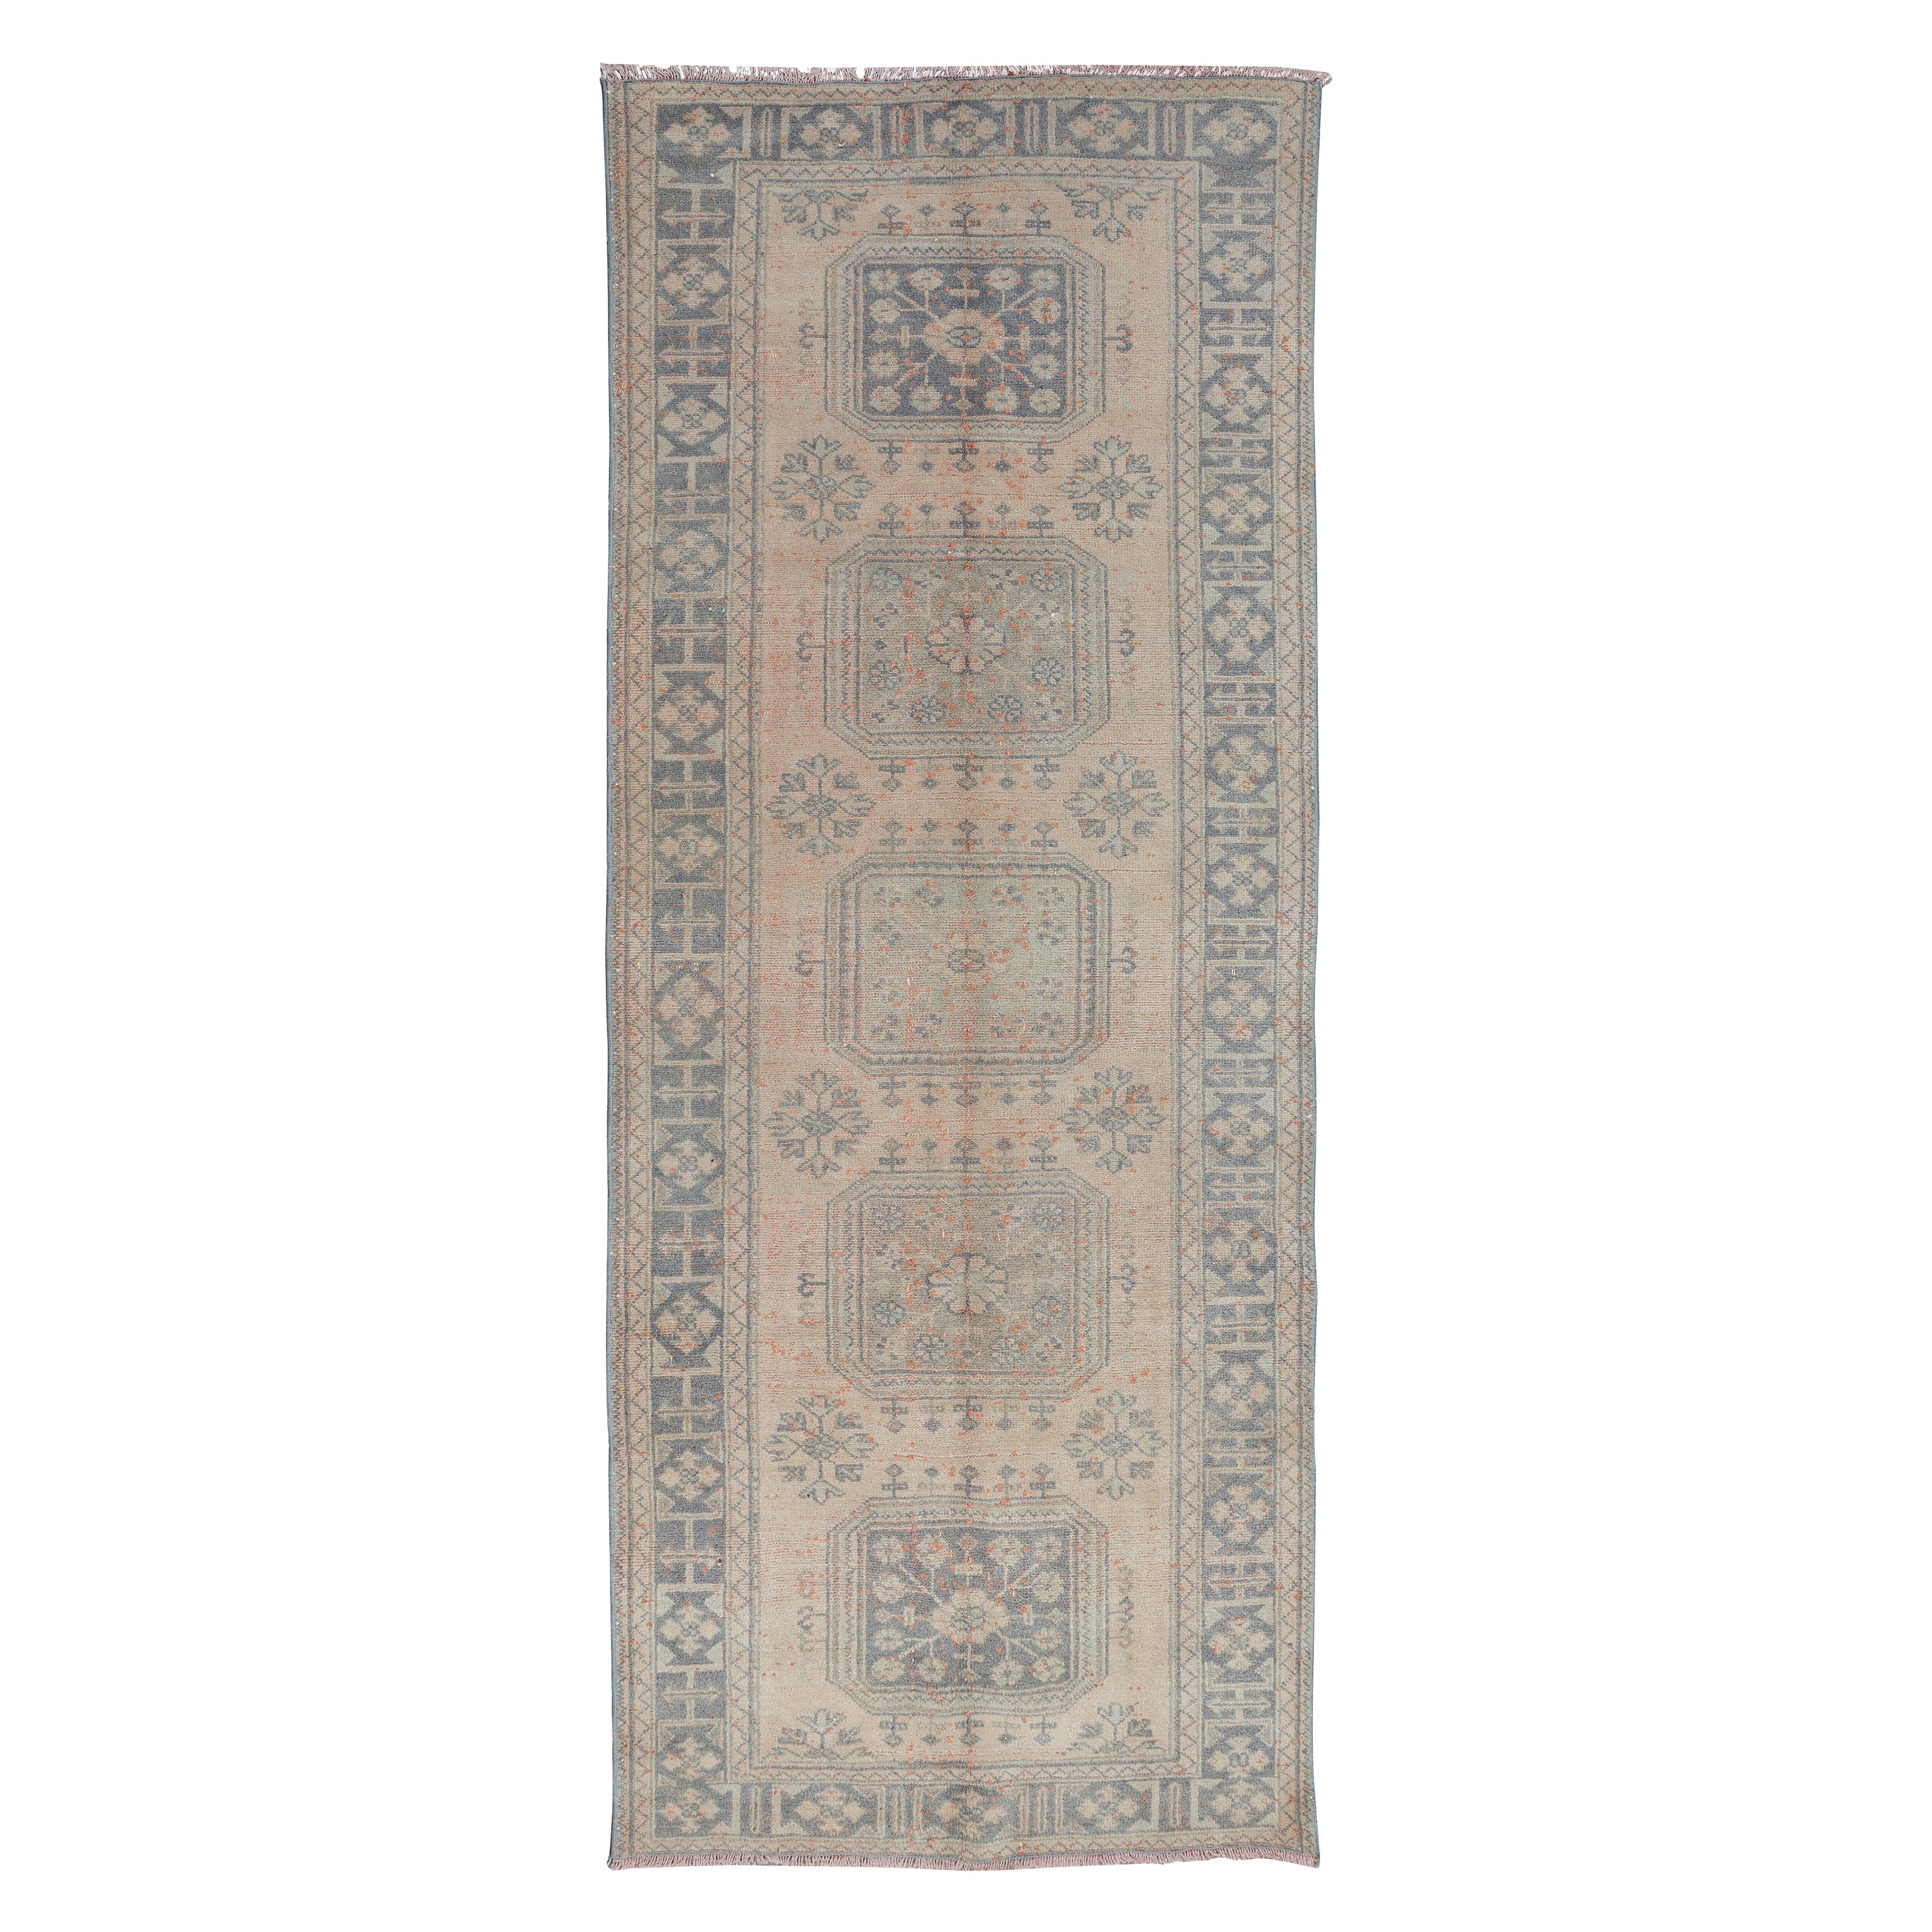 4.6x11.2 Ft Handmade Turkish Hallway Runner, Vintage Corridor Carpet, Stair Rug